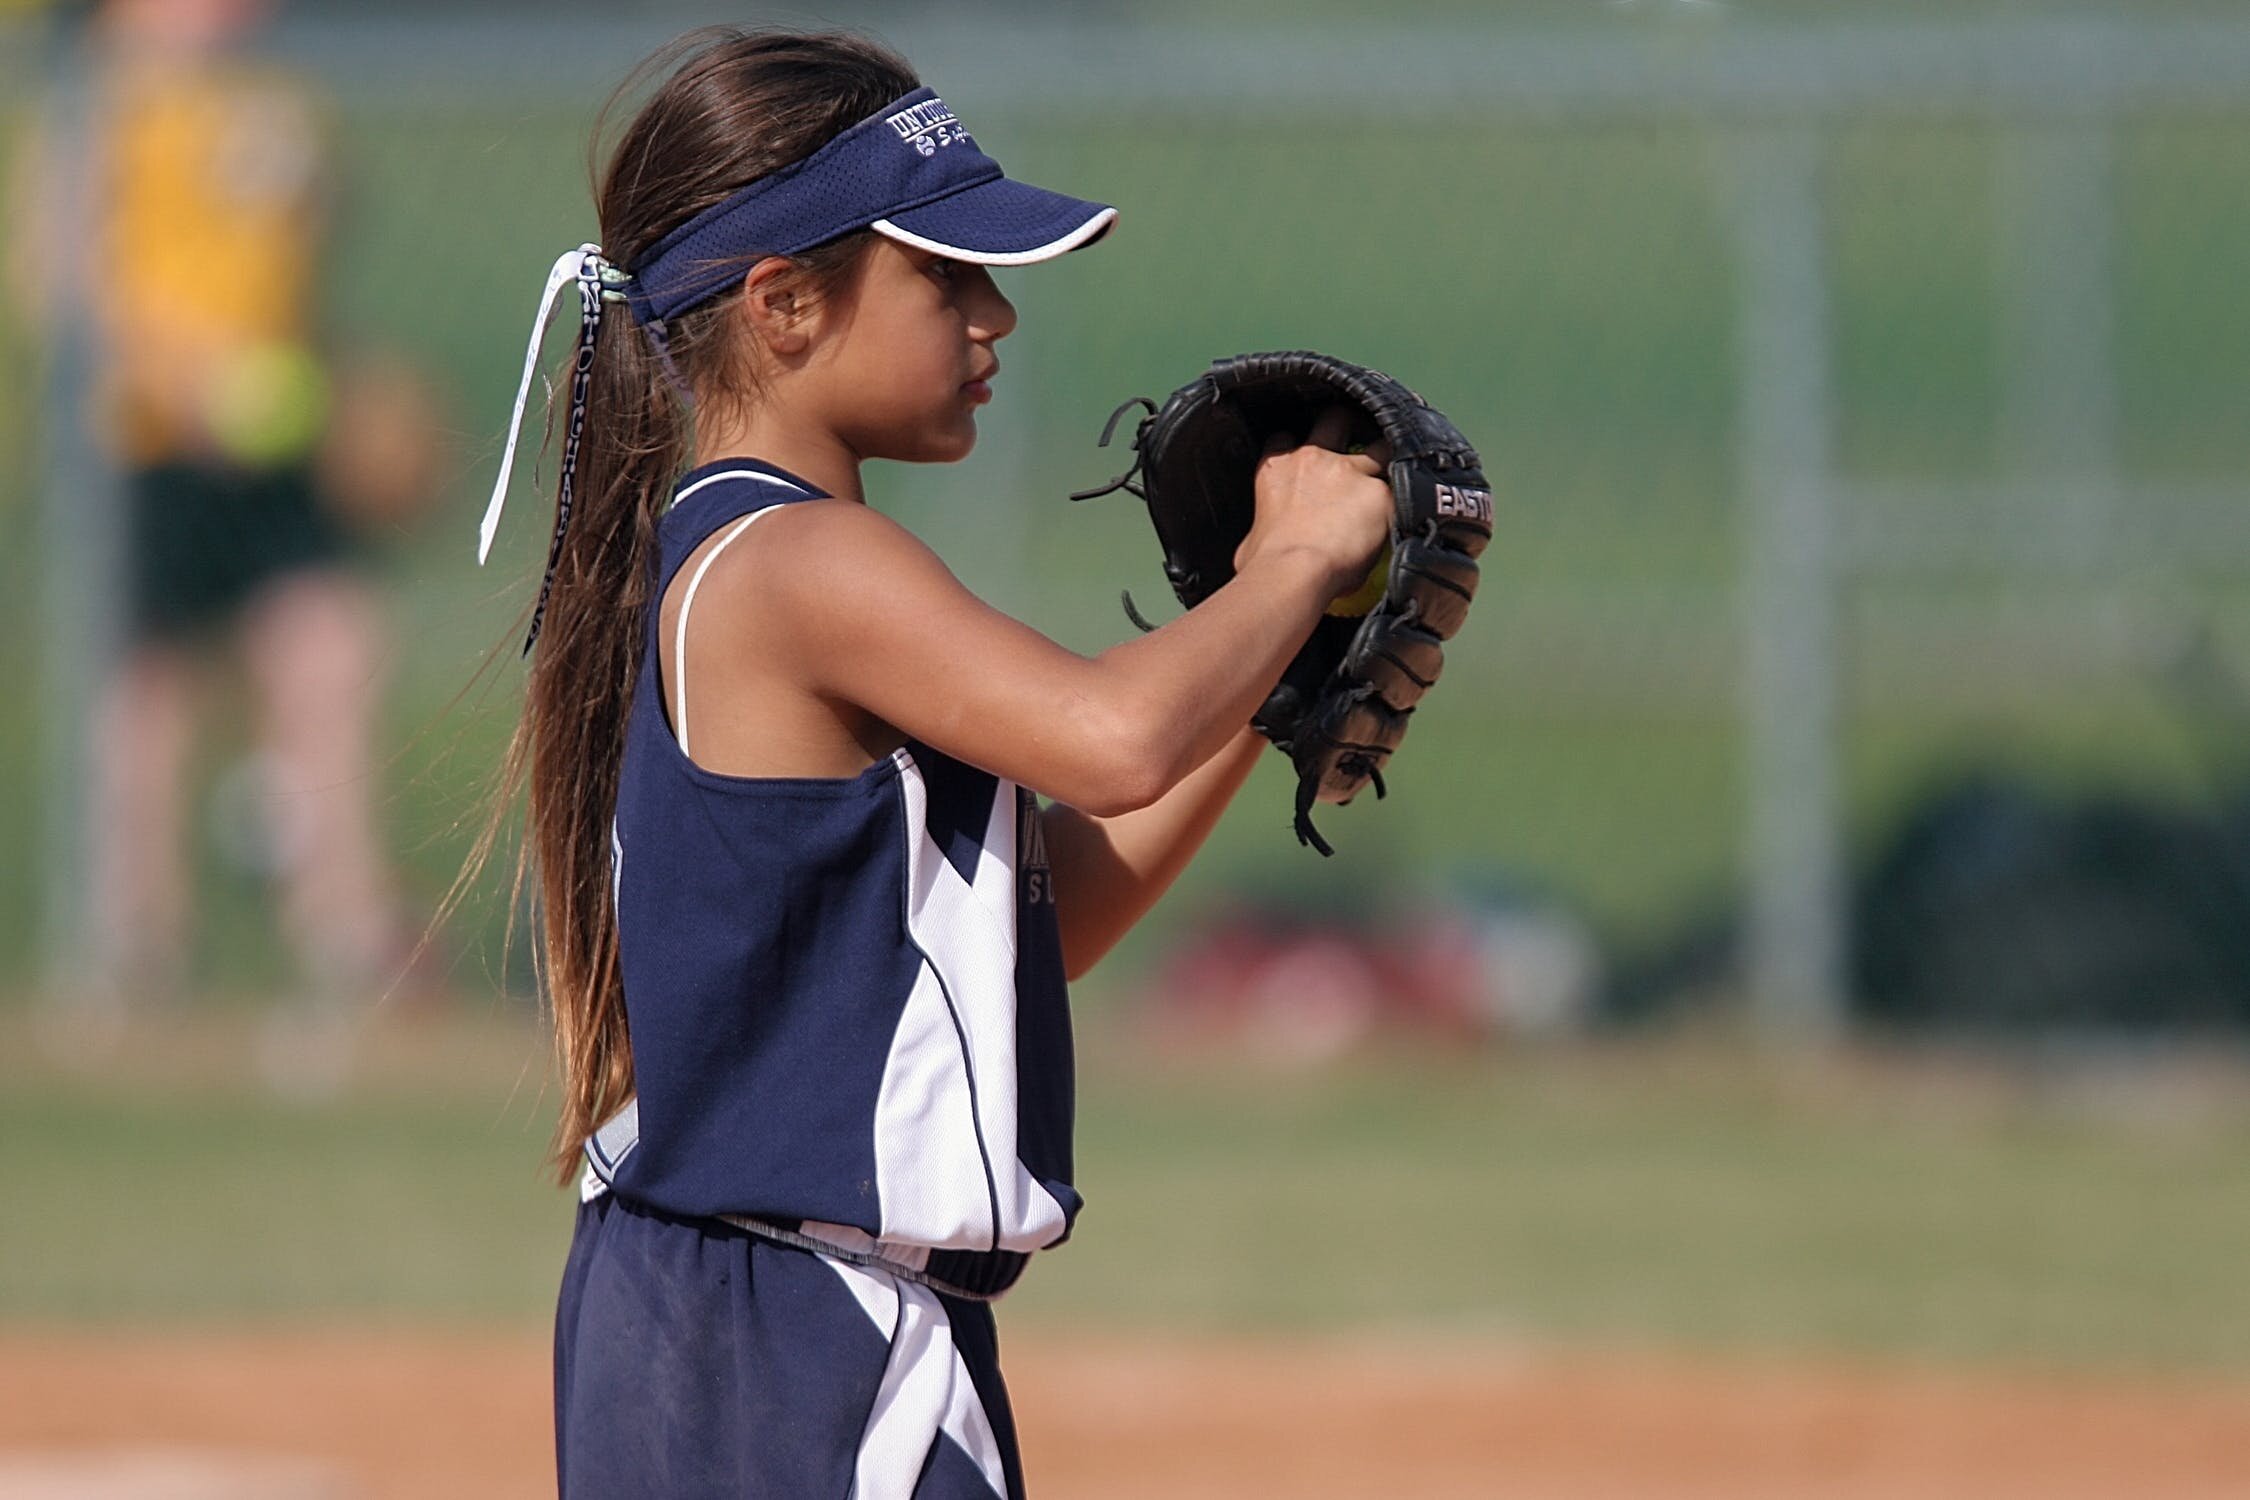 softball-pitcher-female-sport-163365.jpeg